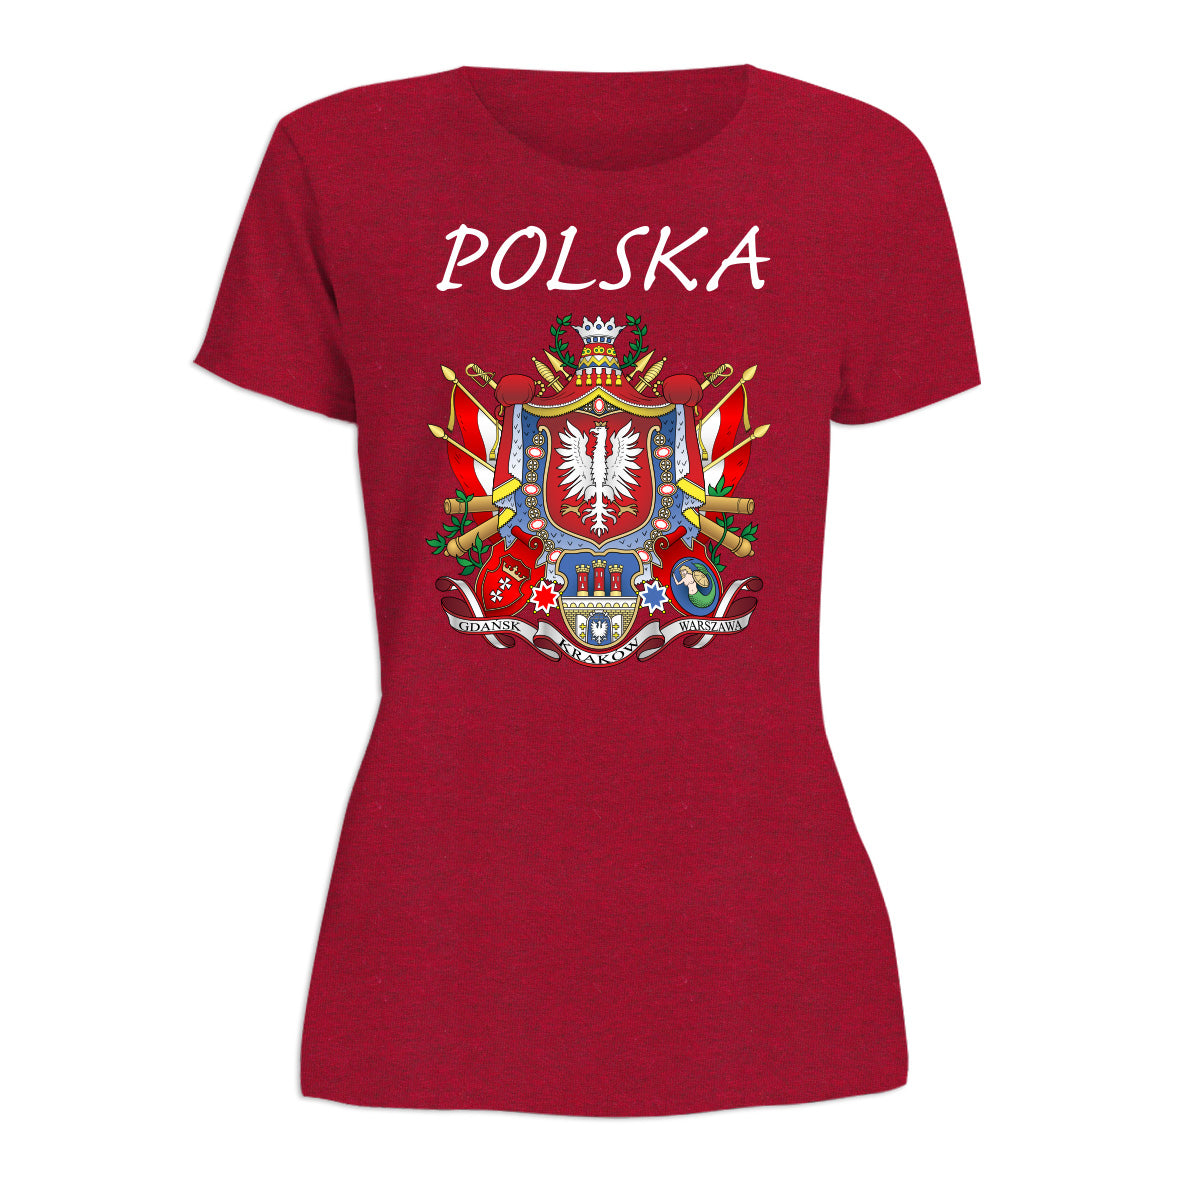 Polska With Three Cities Women's Short Sleeve Tshirt